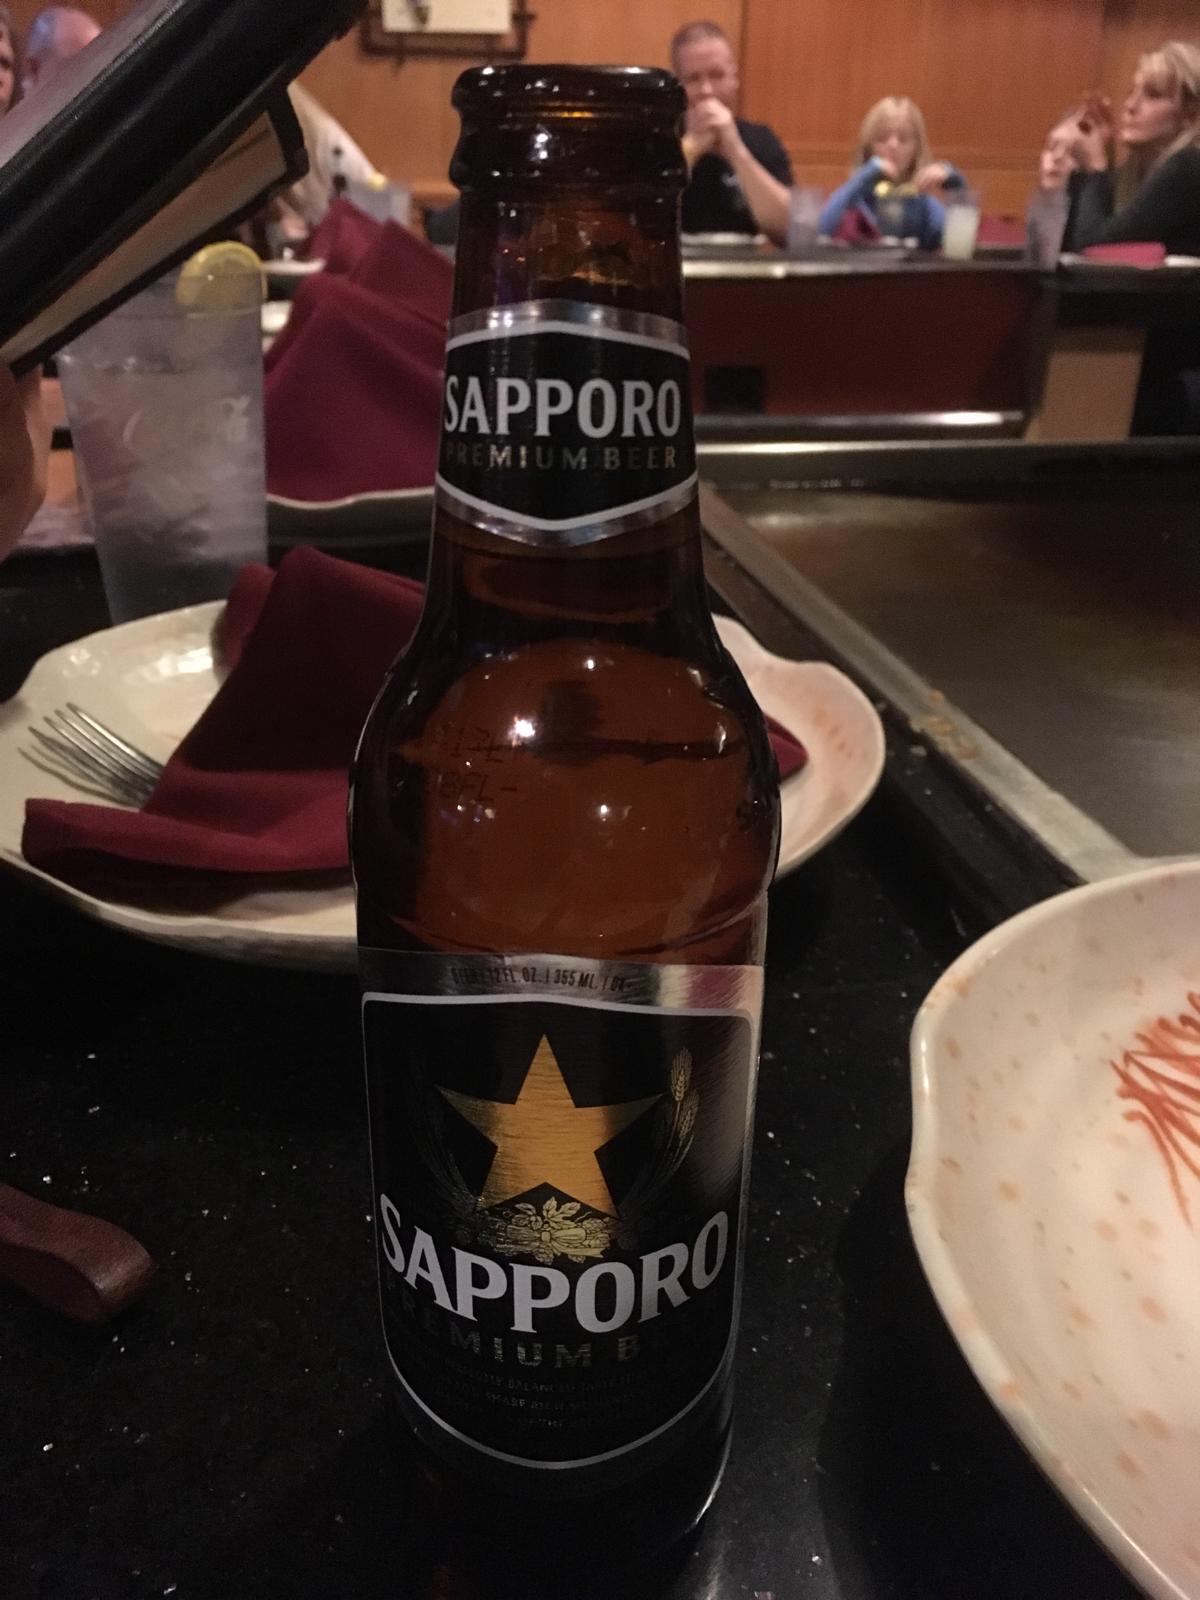 Sapporo Premium Lager (EU Brew)